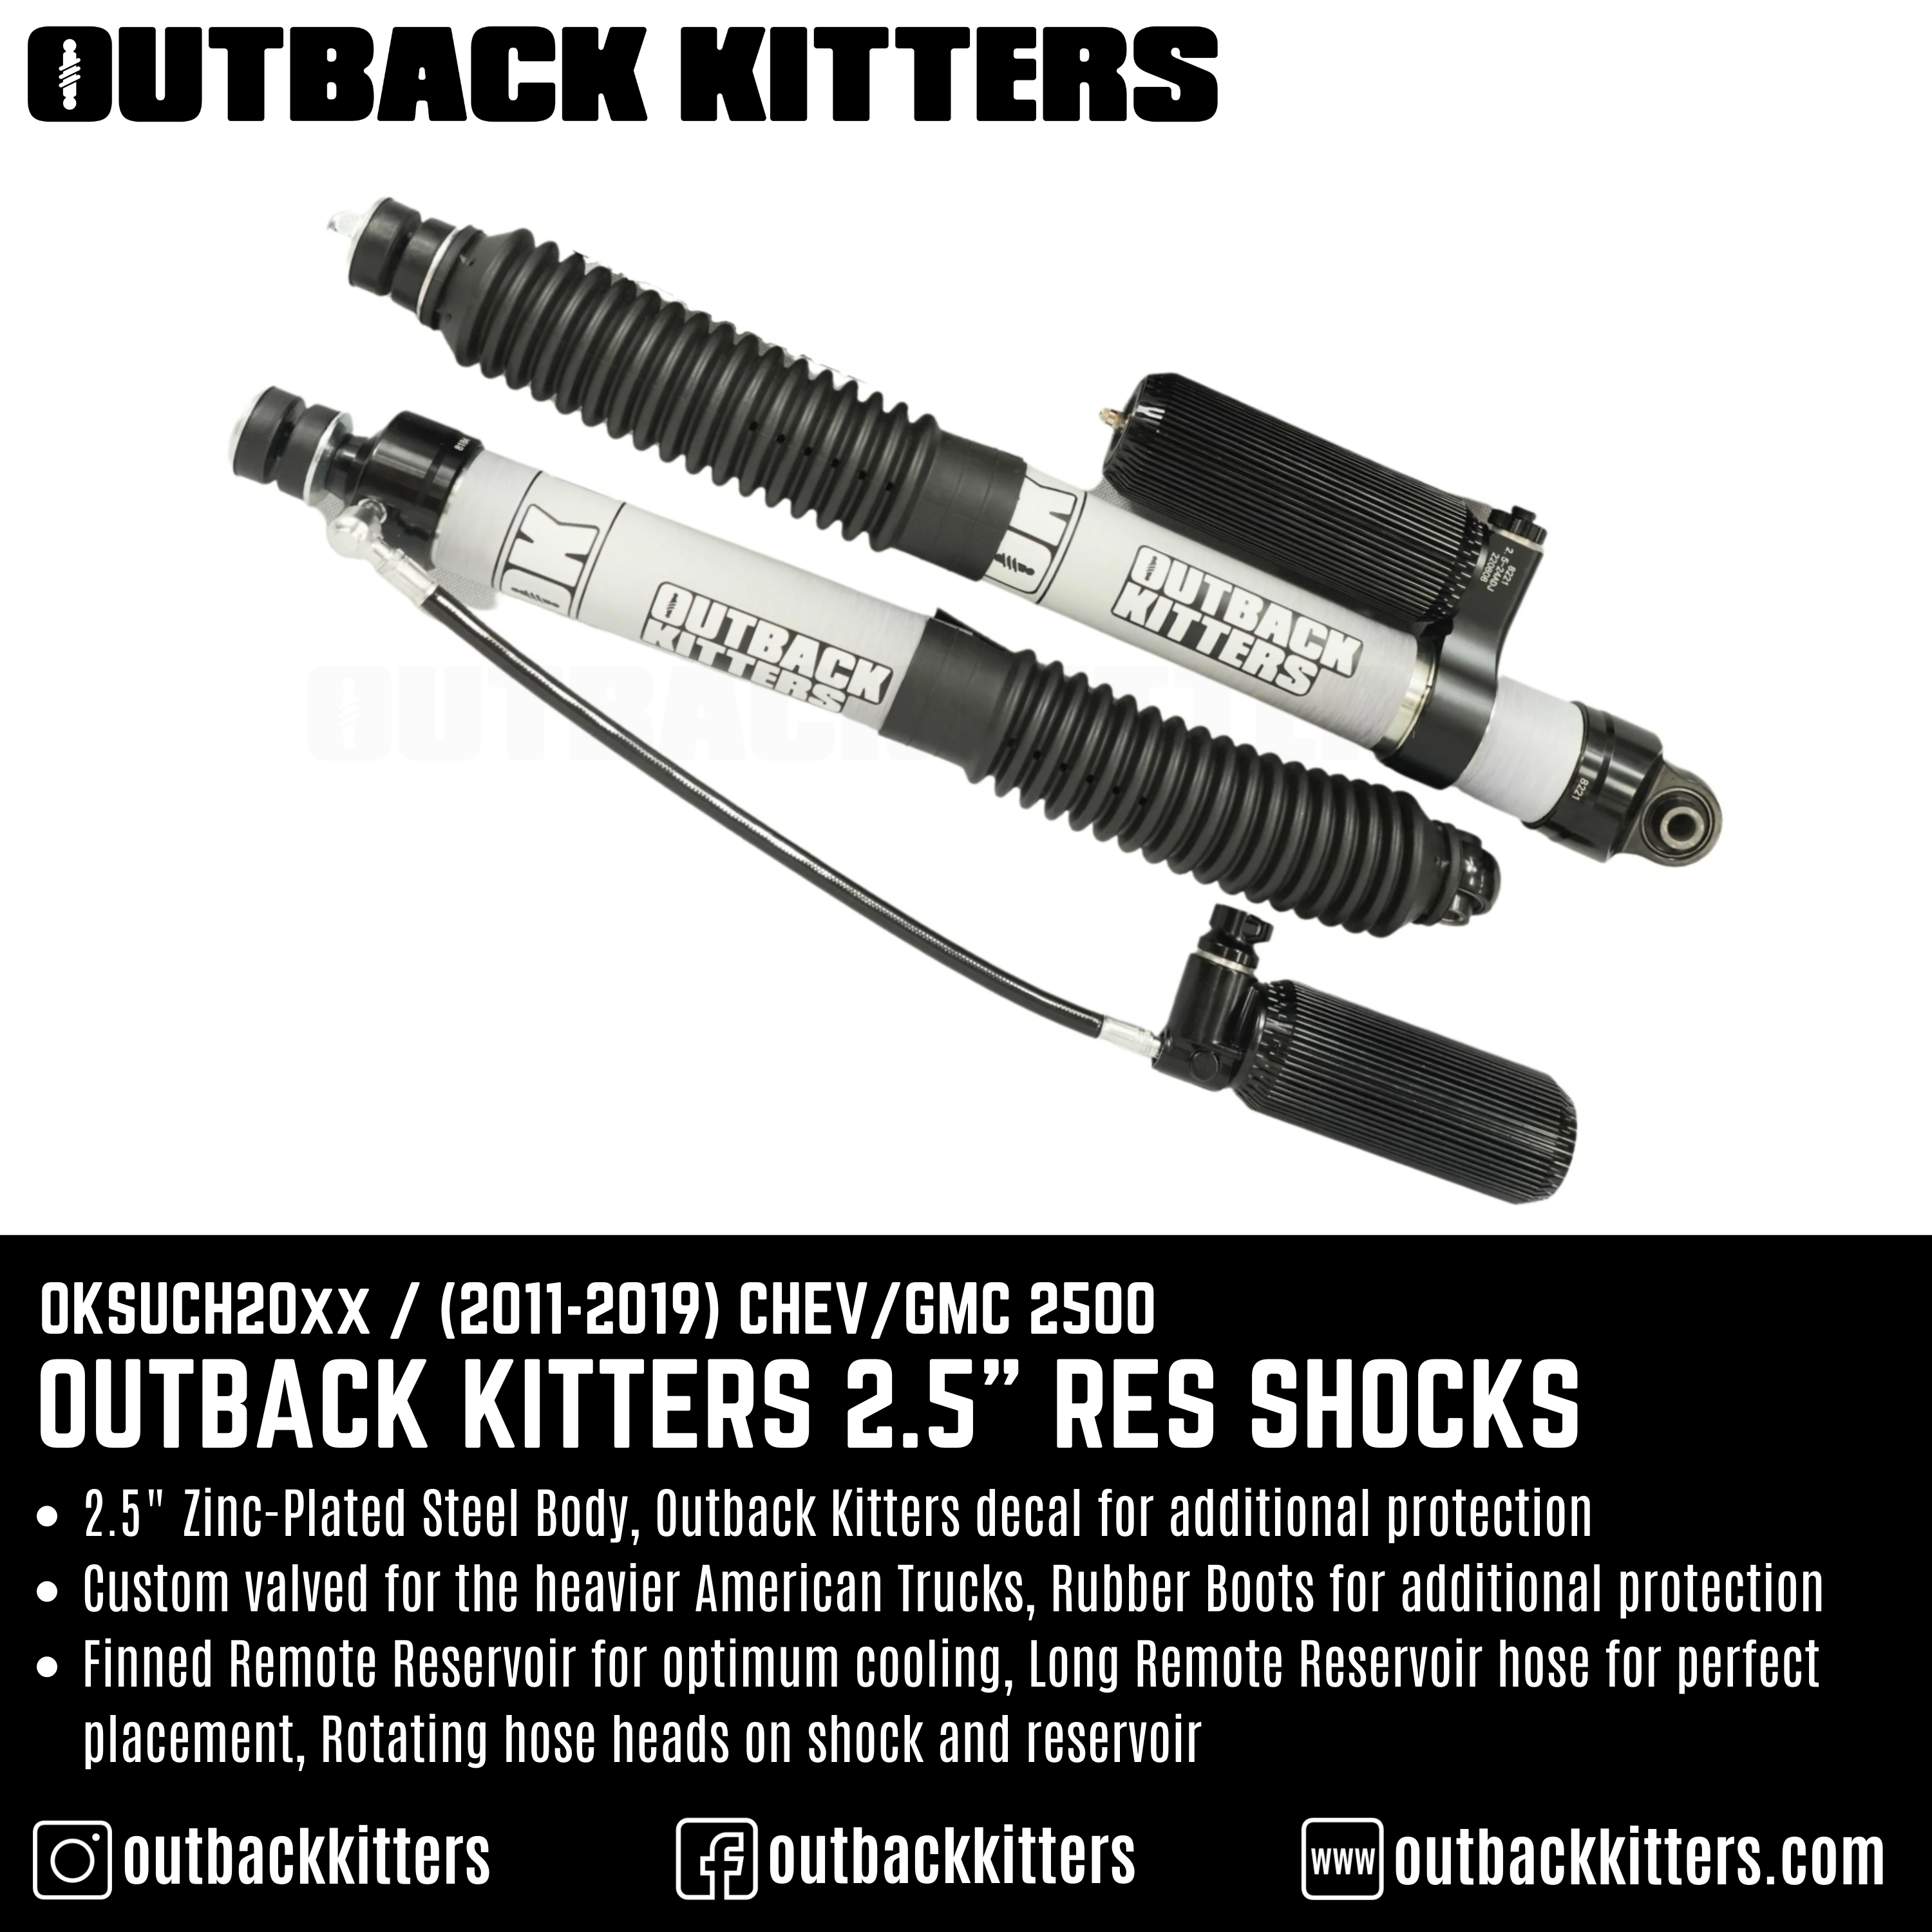 Outback Kitters 2.5" Reservoir Shocks for Chev/GMC 2500 (2011-2019) - Outback Kitters